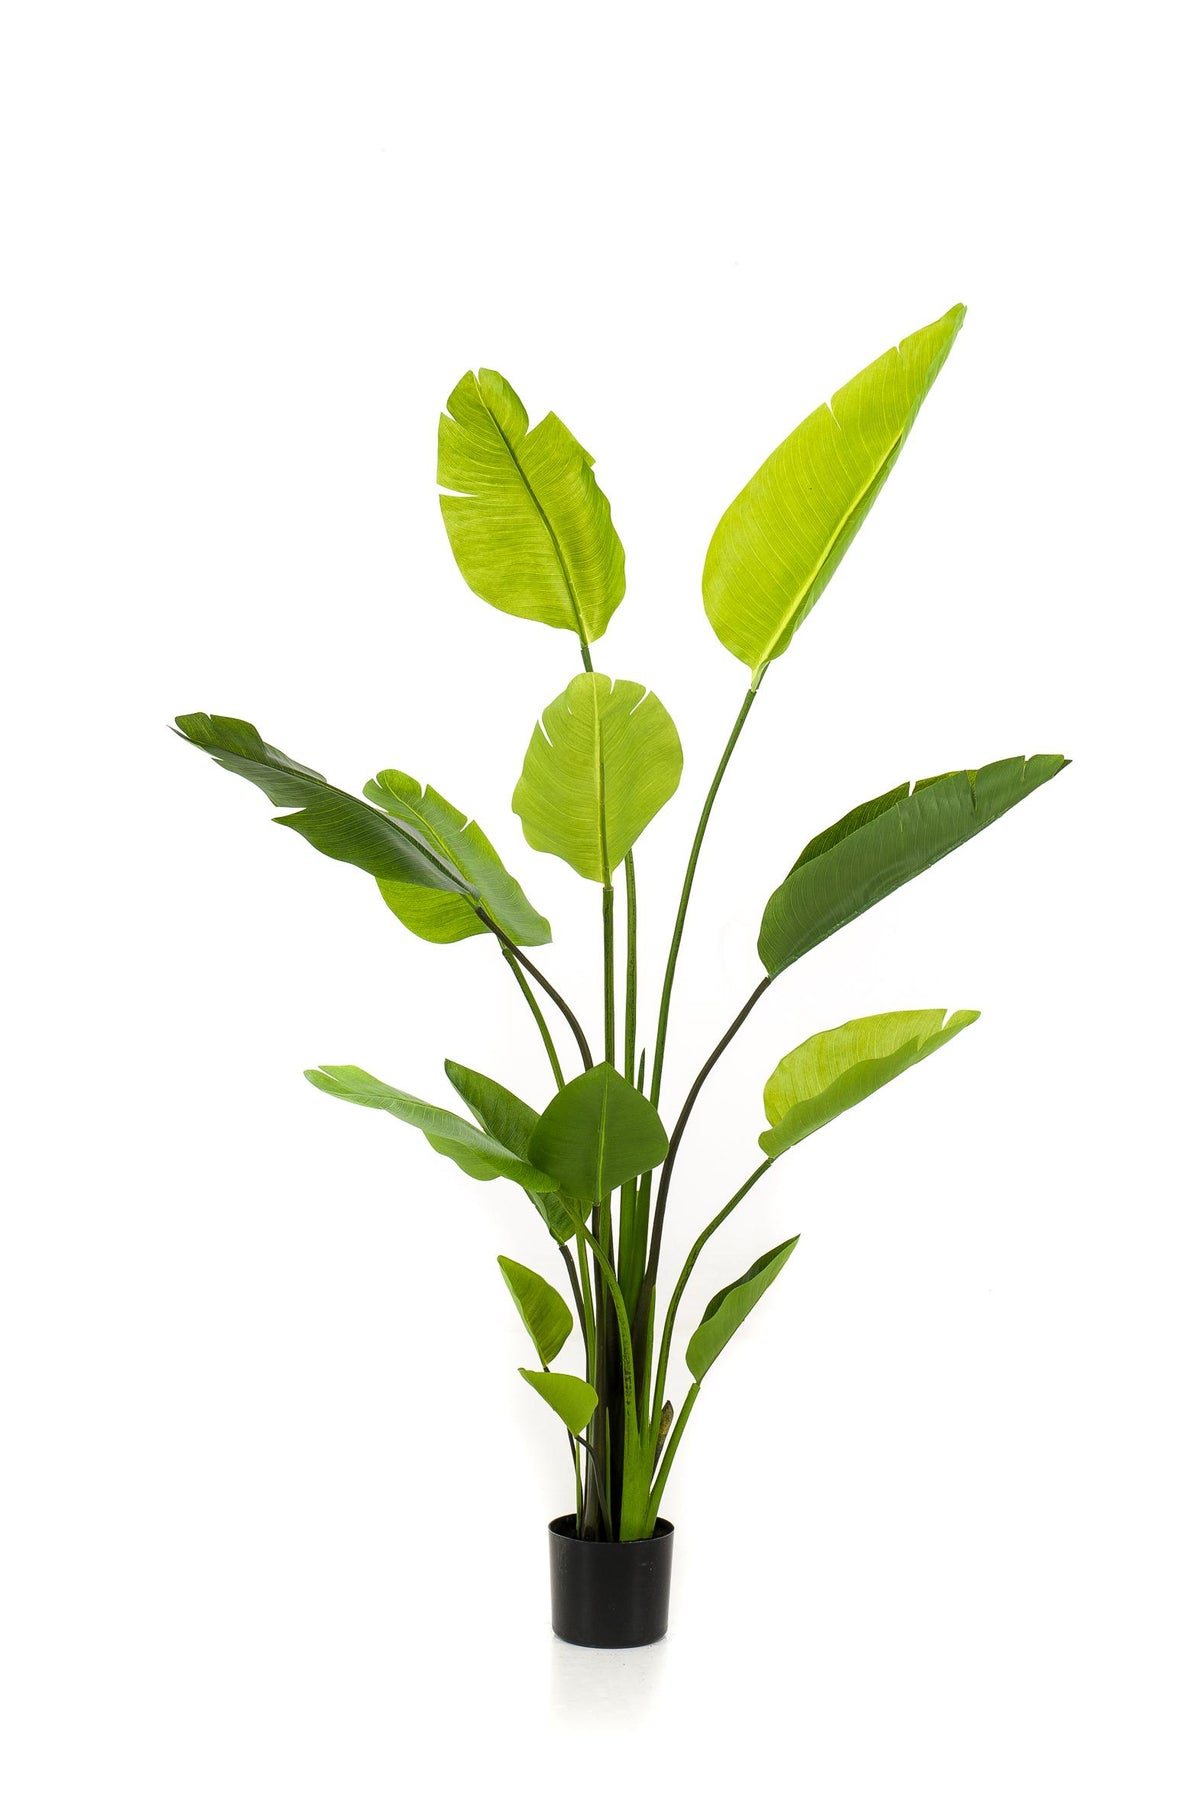 Strelitzia Nicolai - Paradiesvogelblume - 150 cm - kunstpflanze